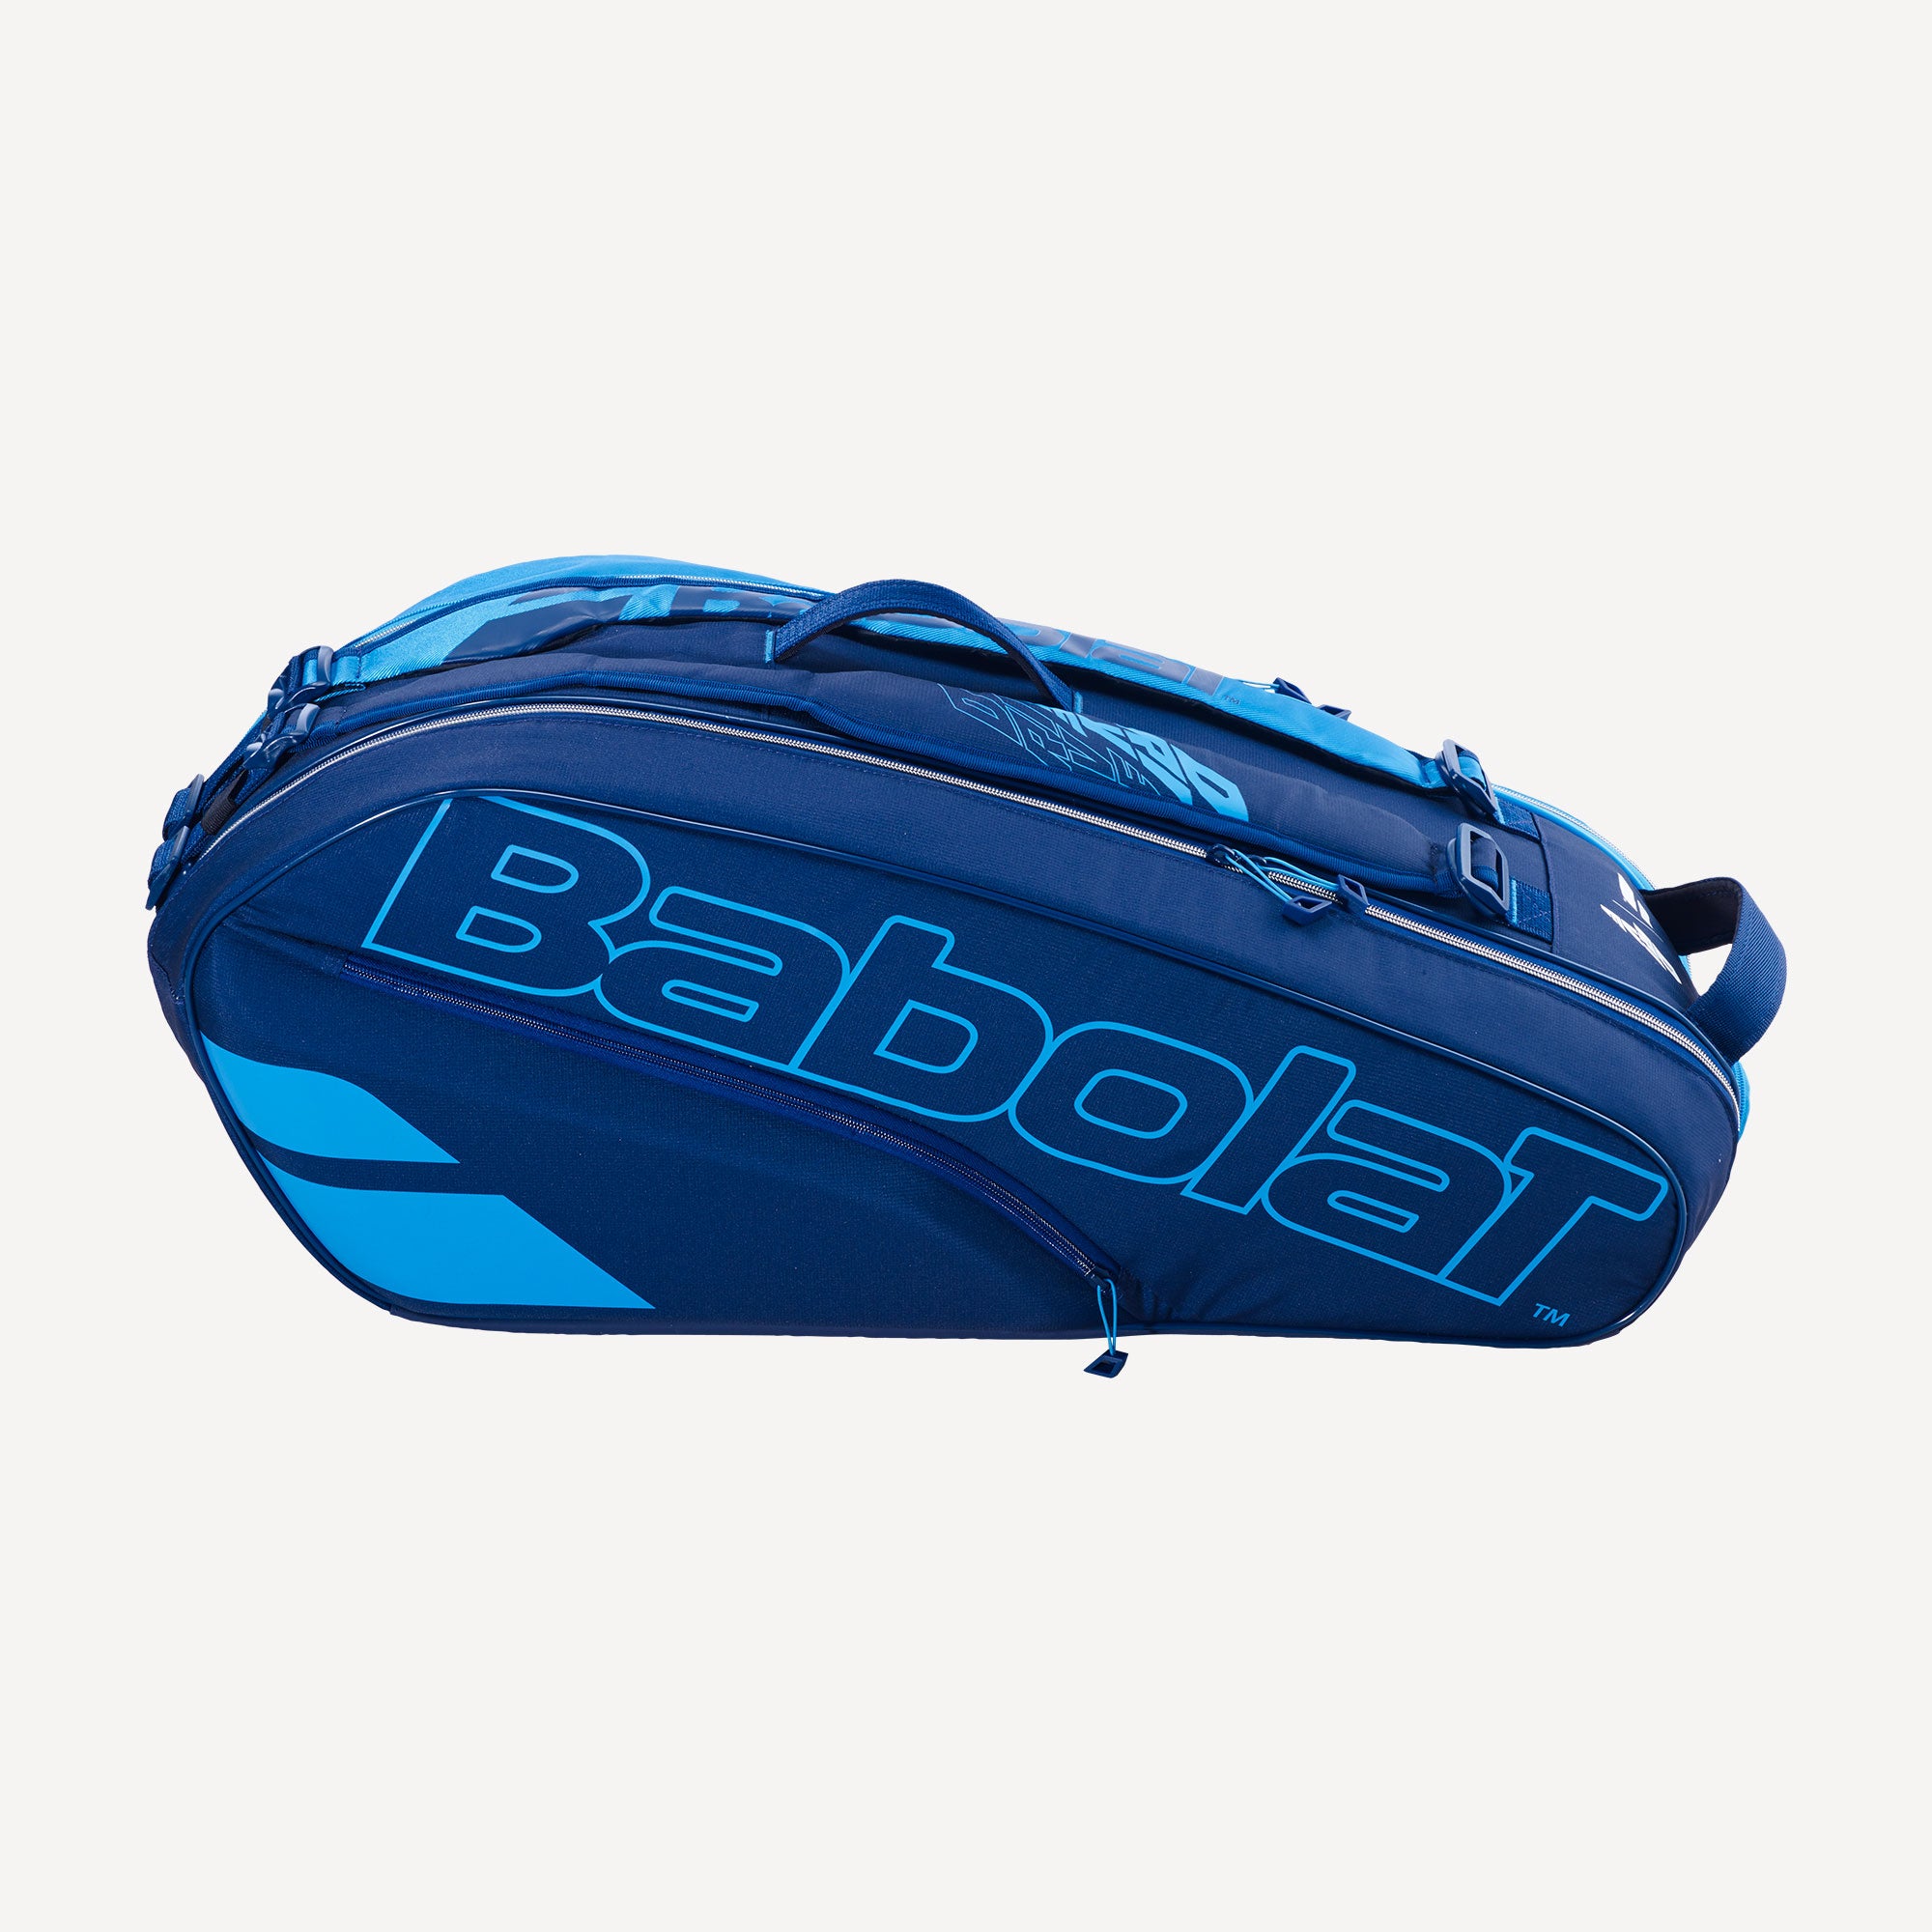 Babolat Pure Drive RH X6 Tennis Bag Blue (3)